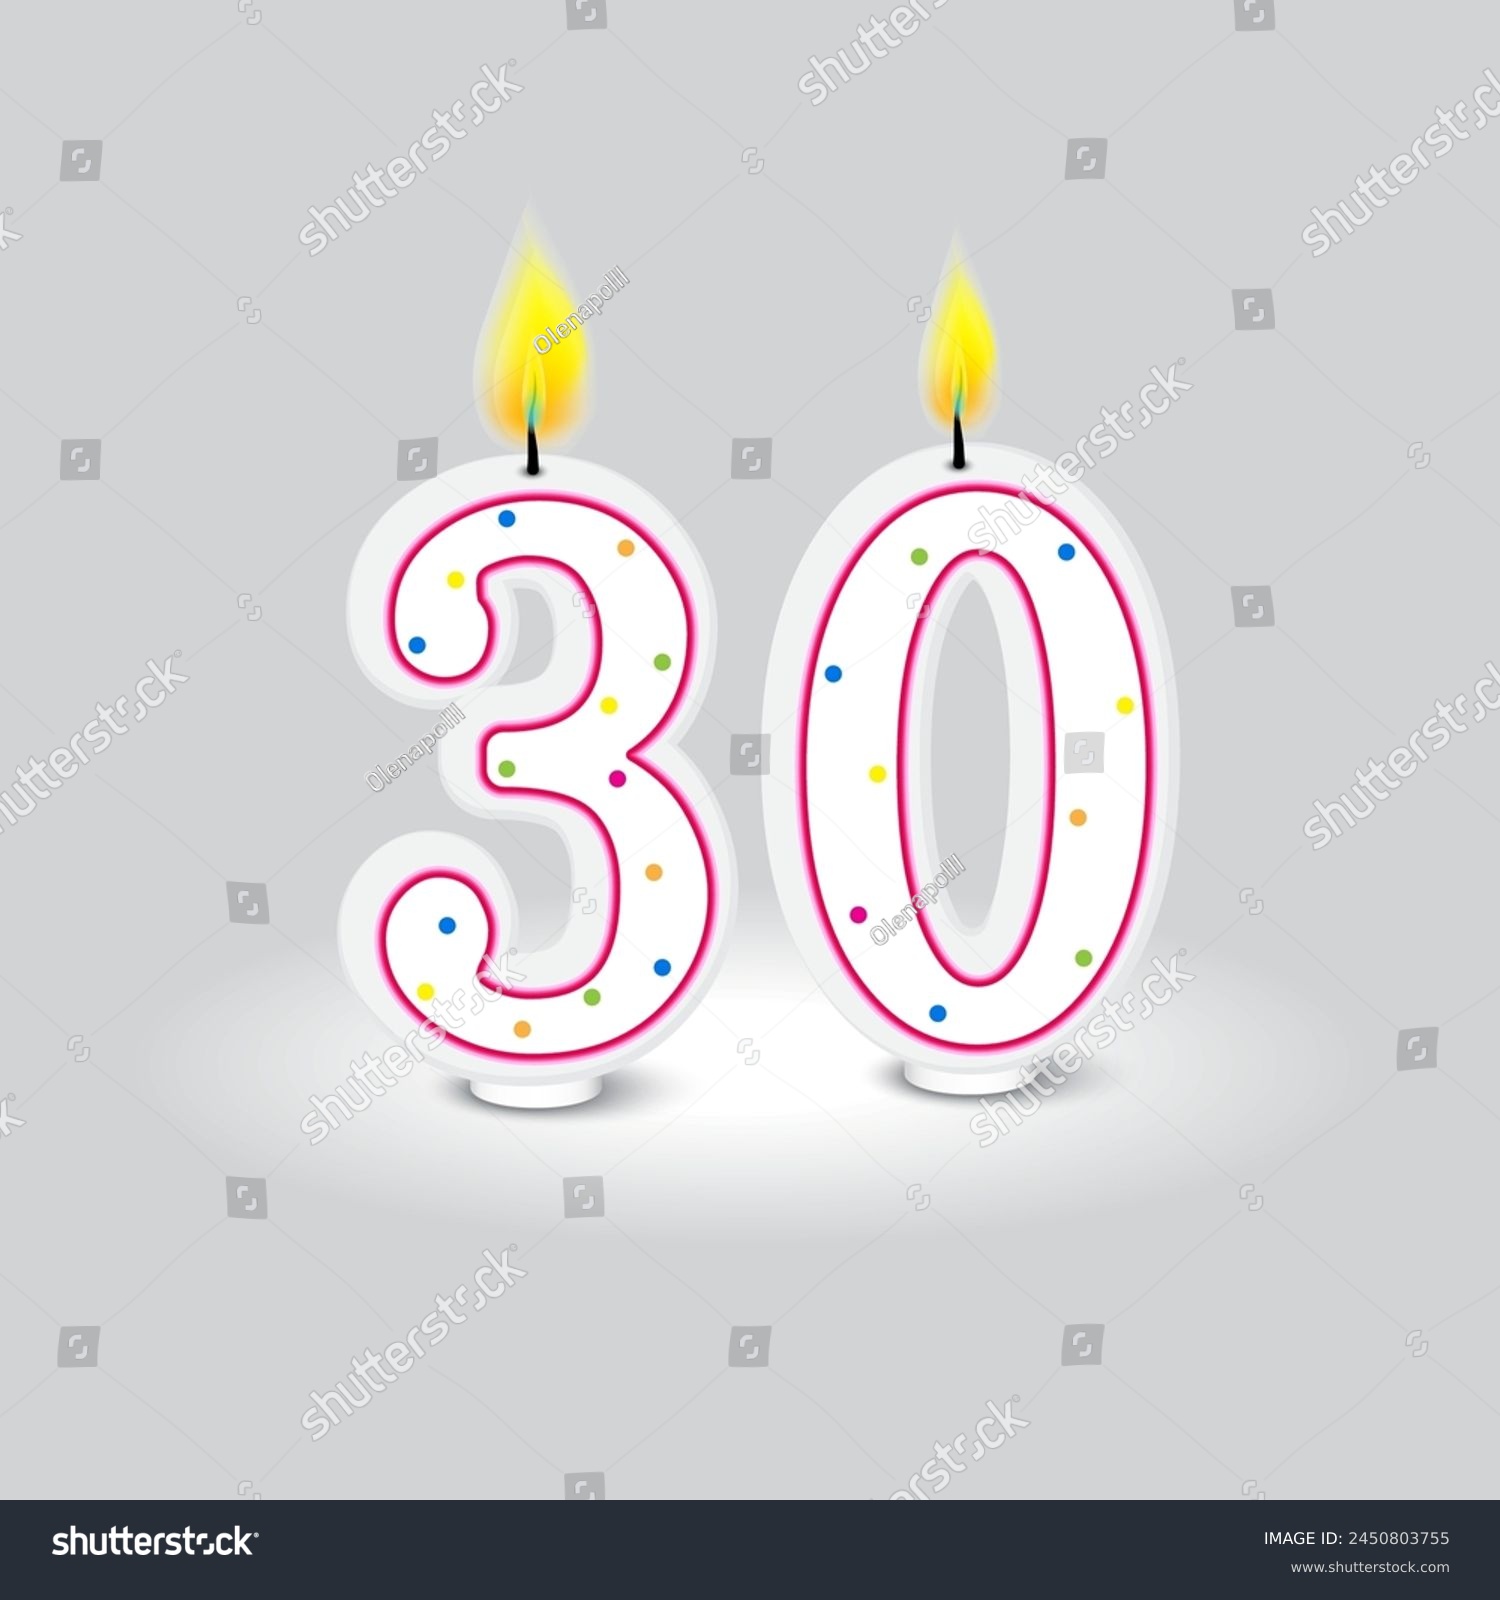 SVG of Number 30 birthday candles with colorful polka dots. Milestone celebration design. Vector illustration. EPS 10. svg